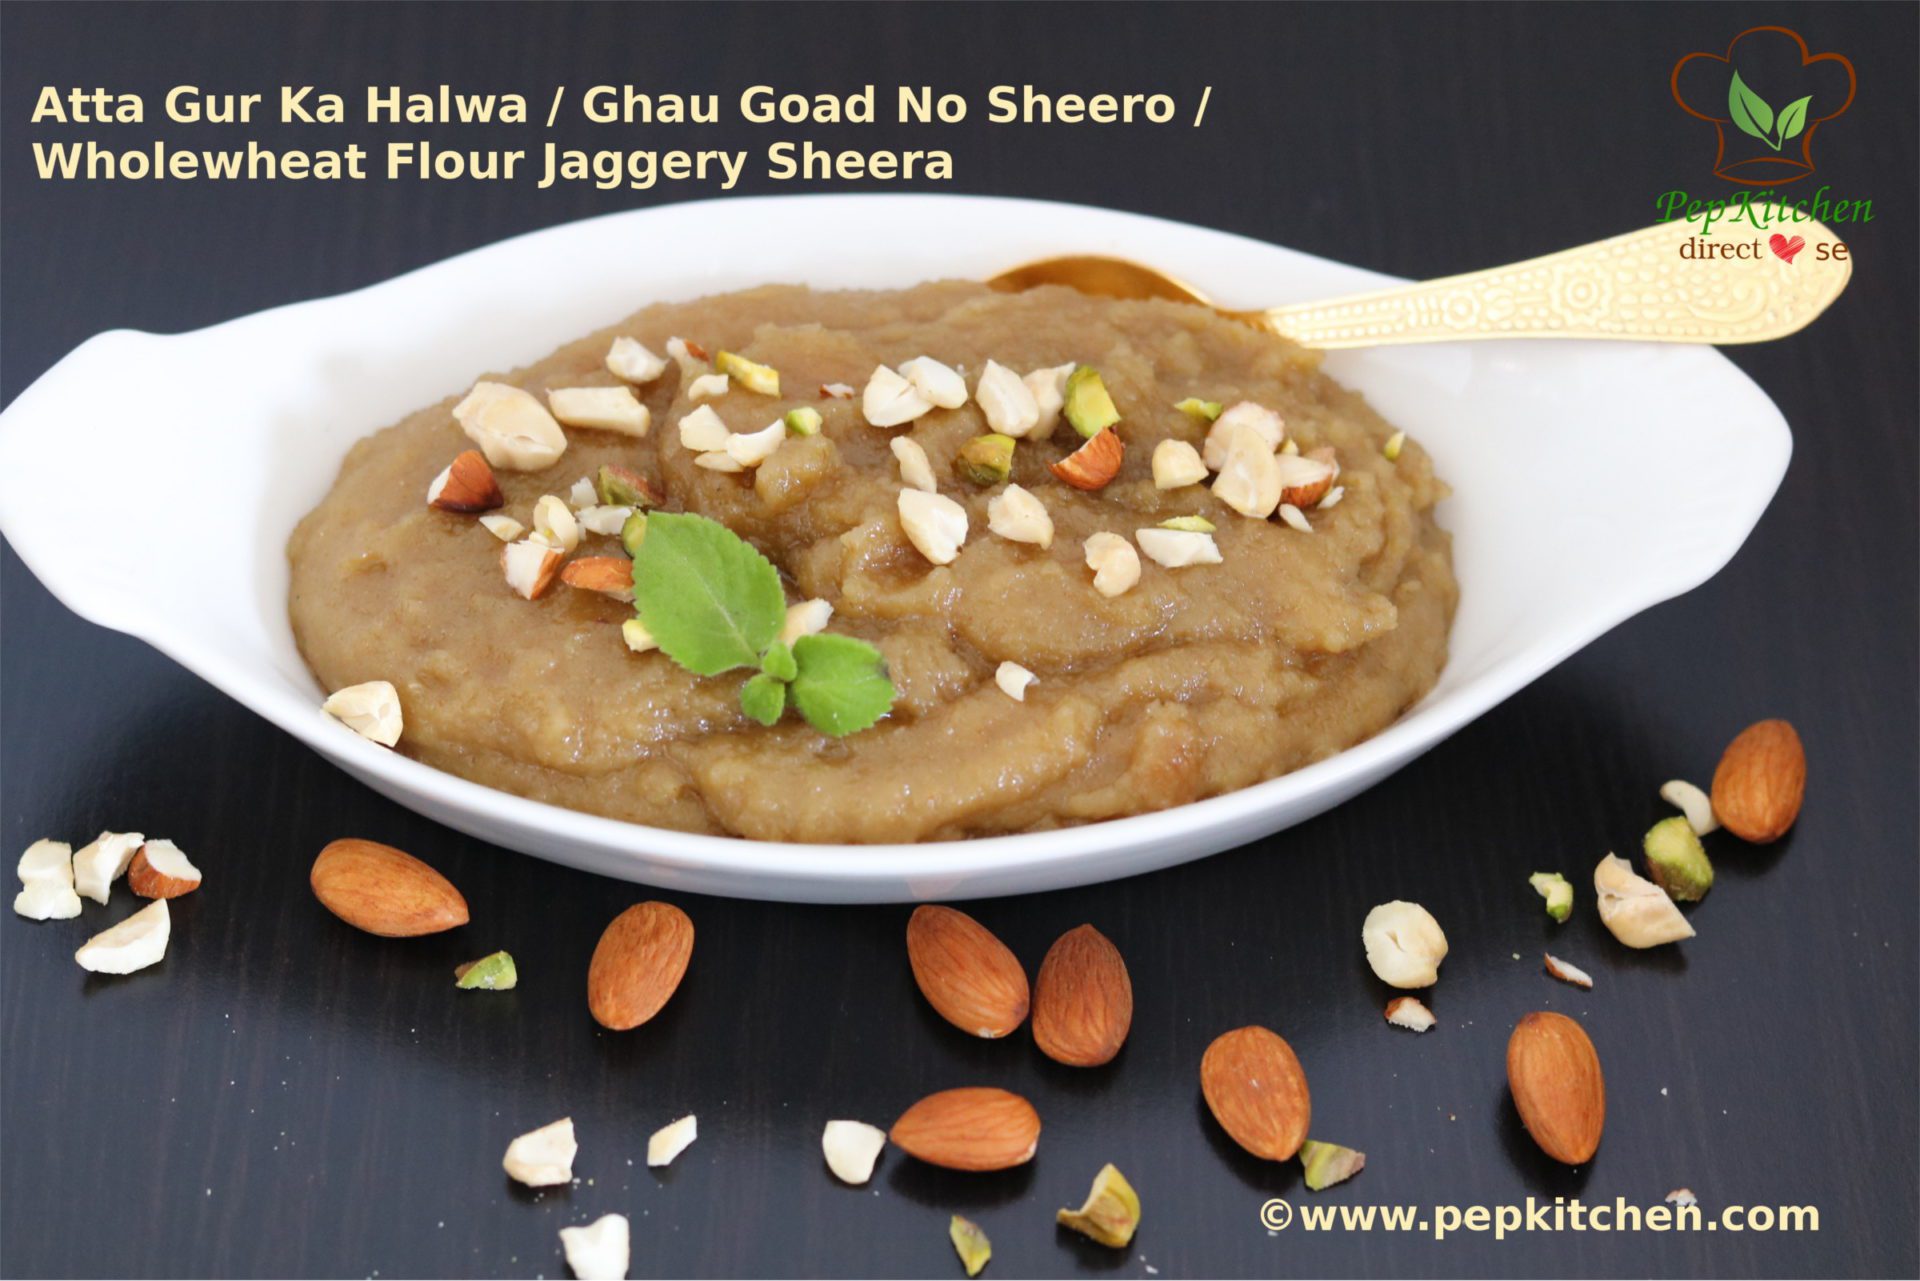 Atta Gur Ka Halwa / Ghau Goad No Sheero / Wholewheat Flour Jaggery Sheera